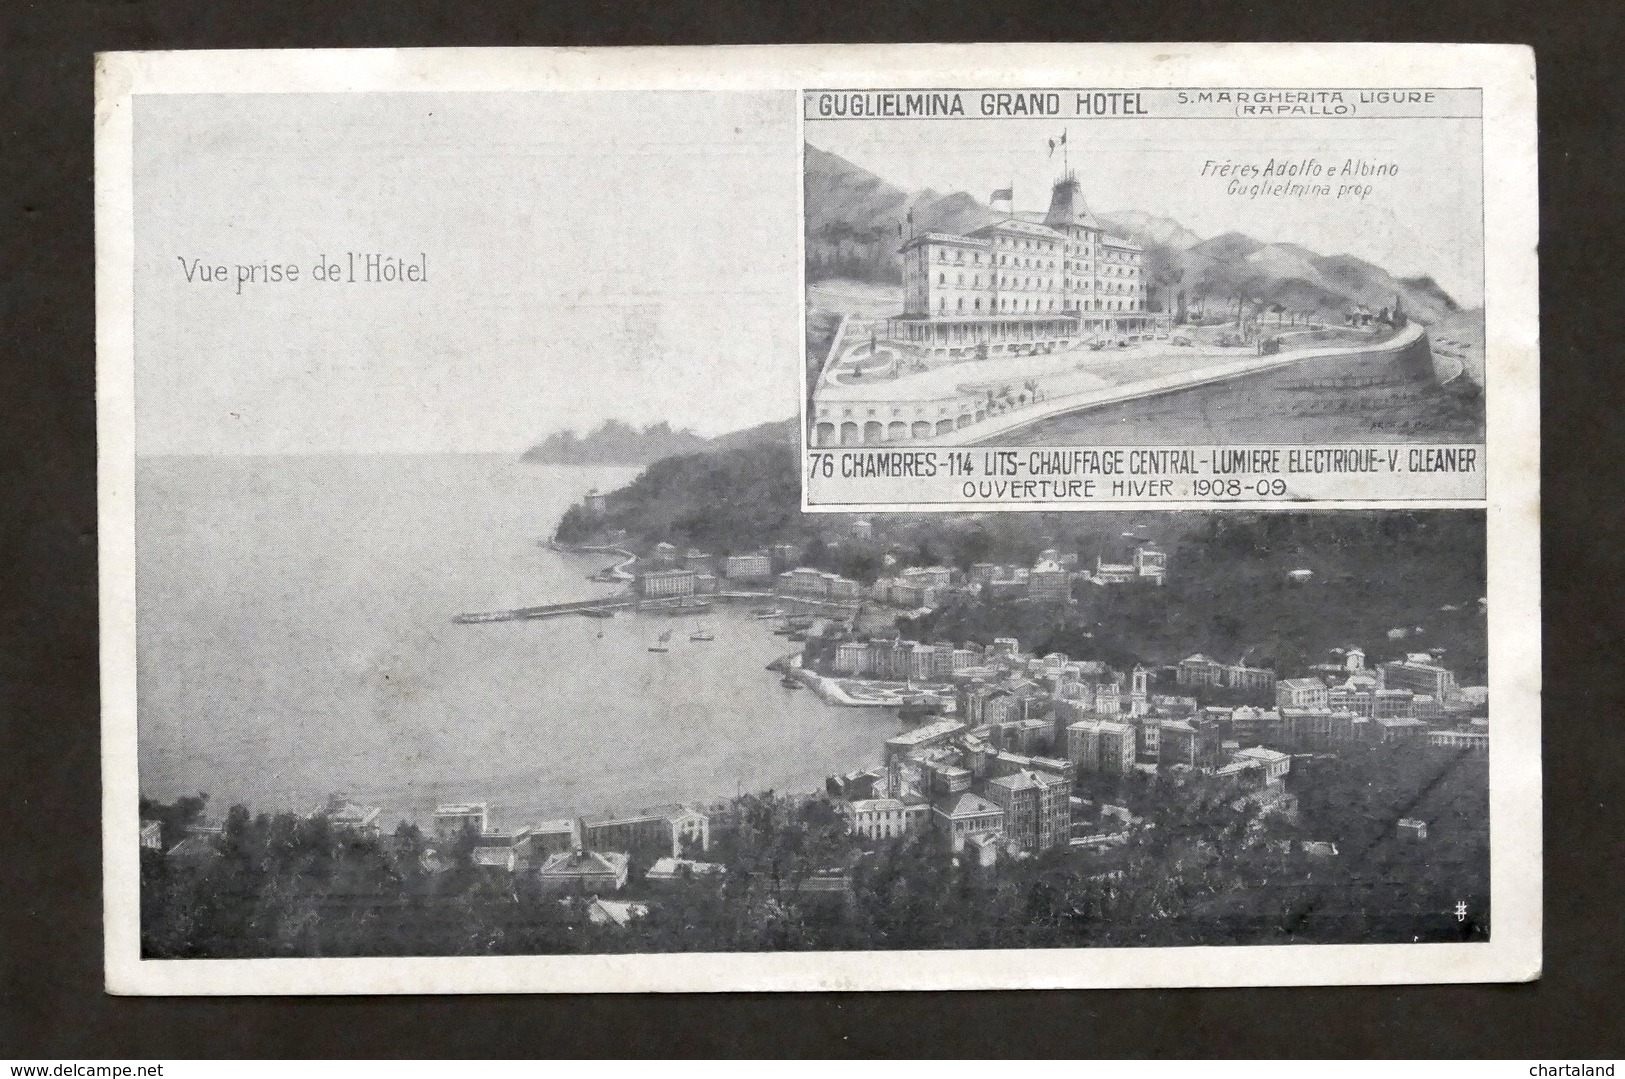 Turismo - Brochure Guglielmina Grand Hotel - Santa Margherita Ligure - 1908 - Publicidad